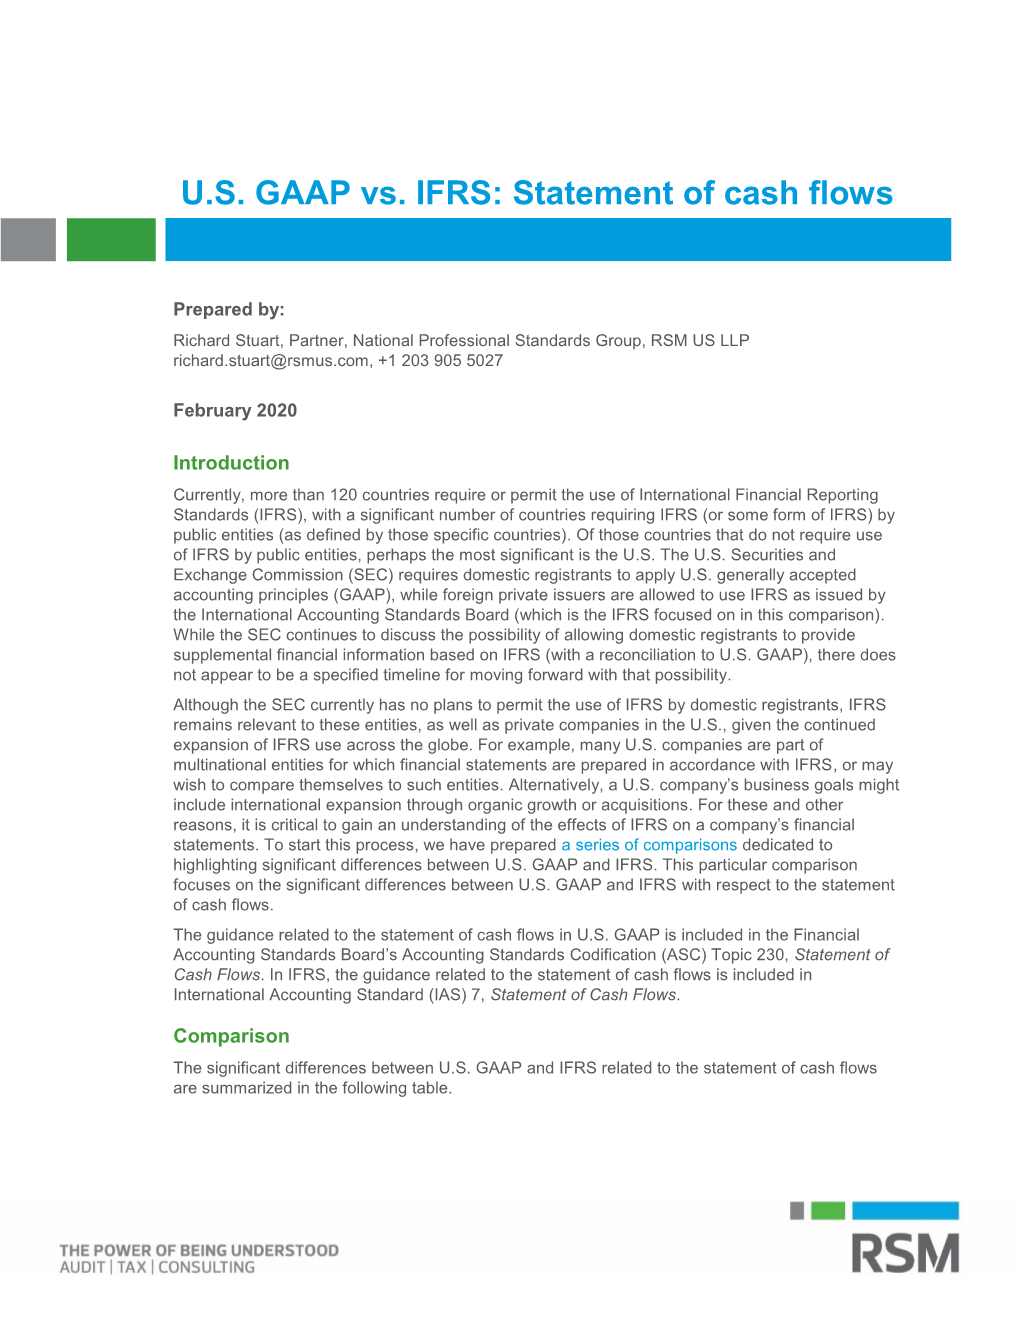 U.S. GAAP Vs. IFRS: Statement of Cash Flows